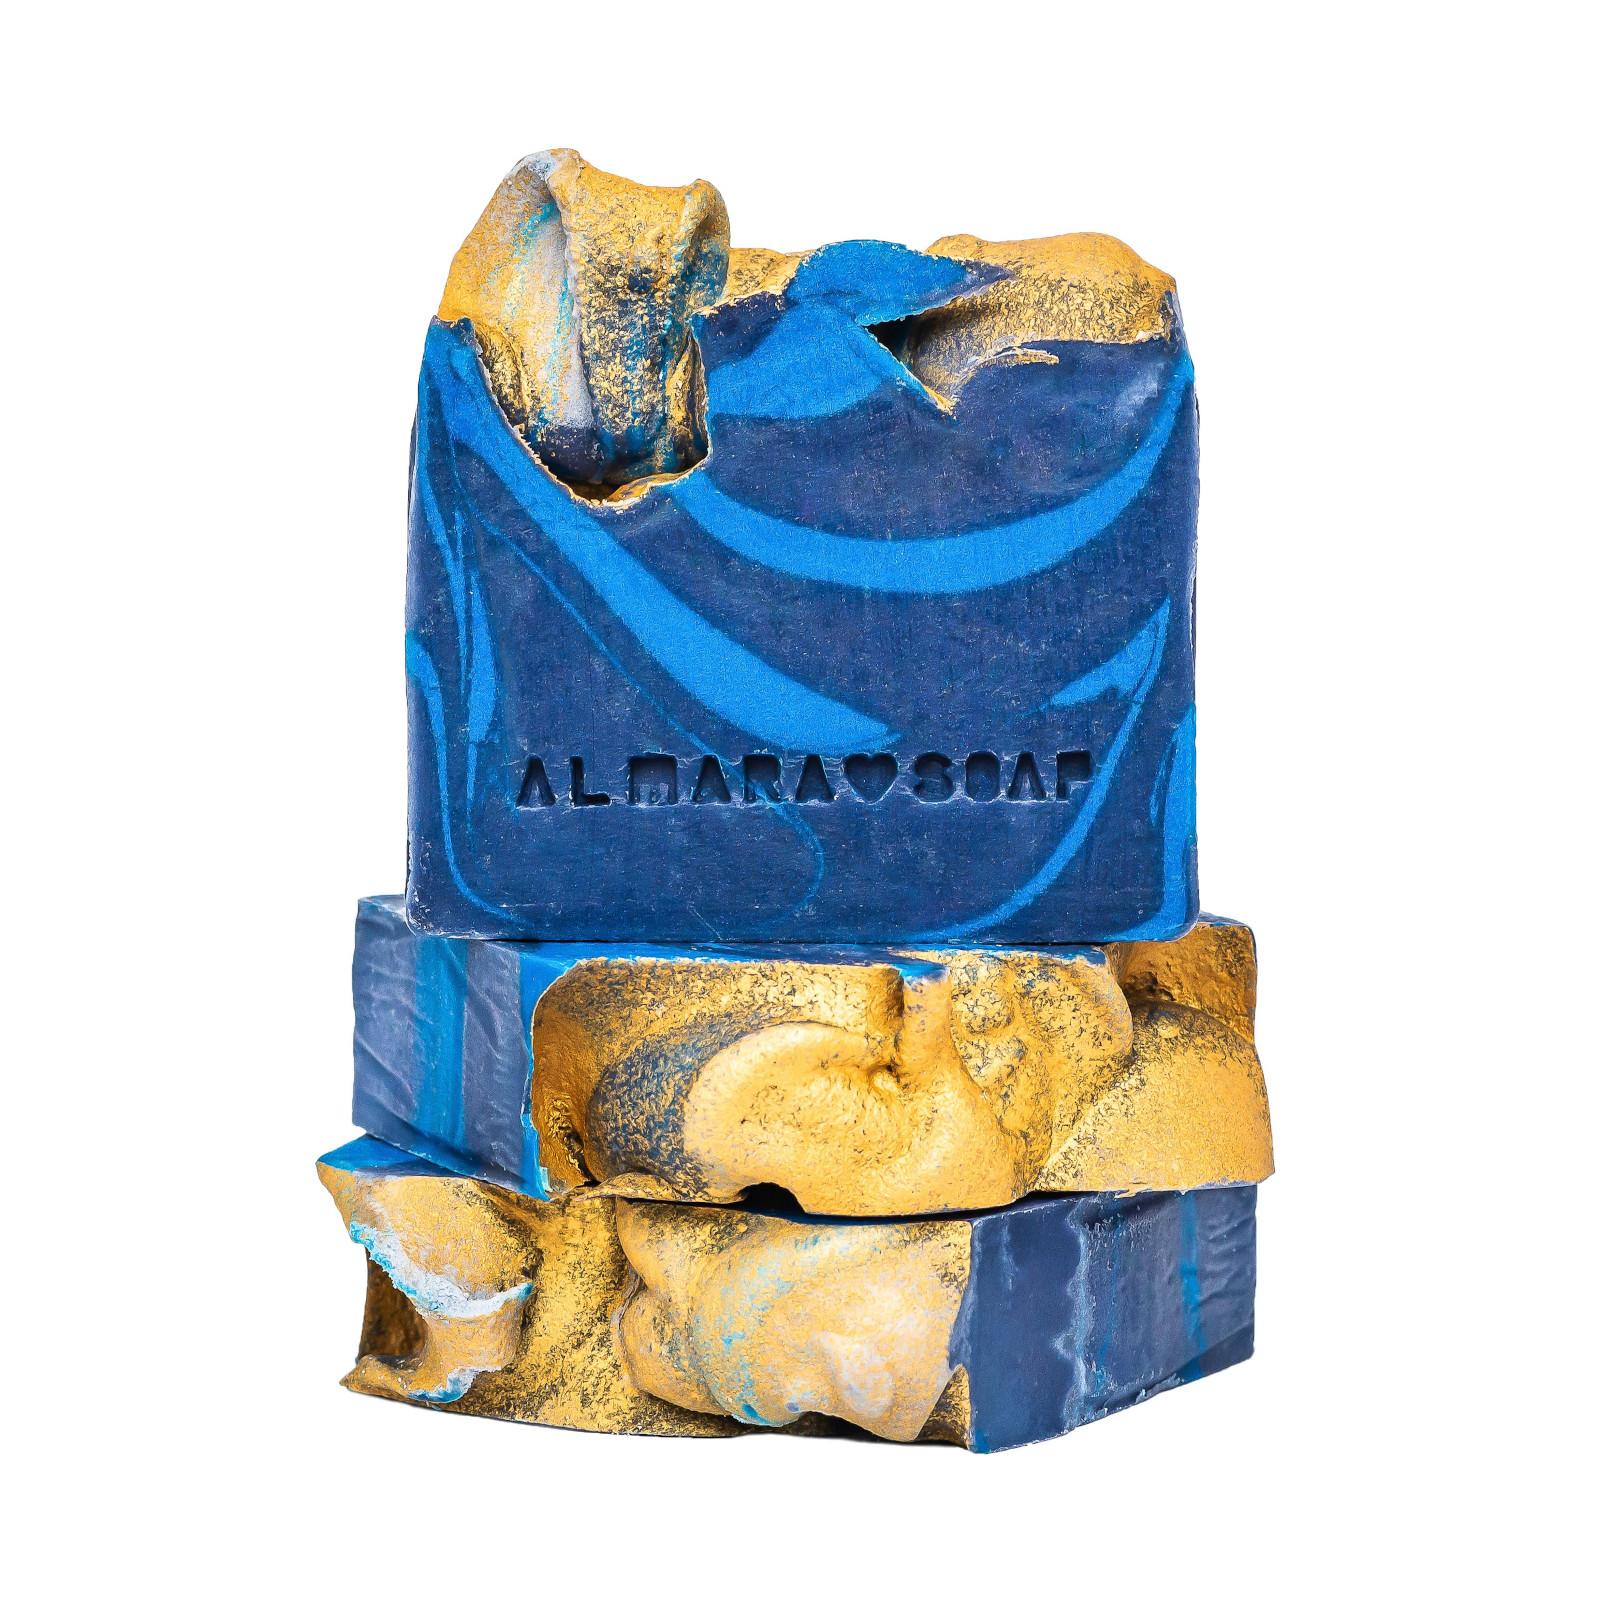 Almara Soap Mýdlo Blueberry Jam 100 g +- 5 g